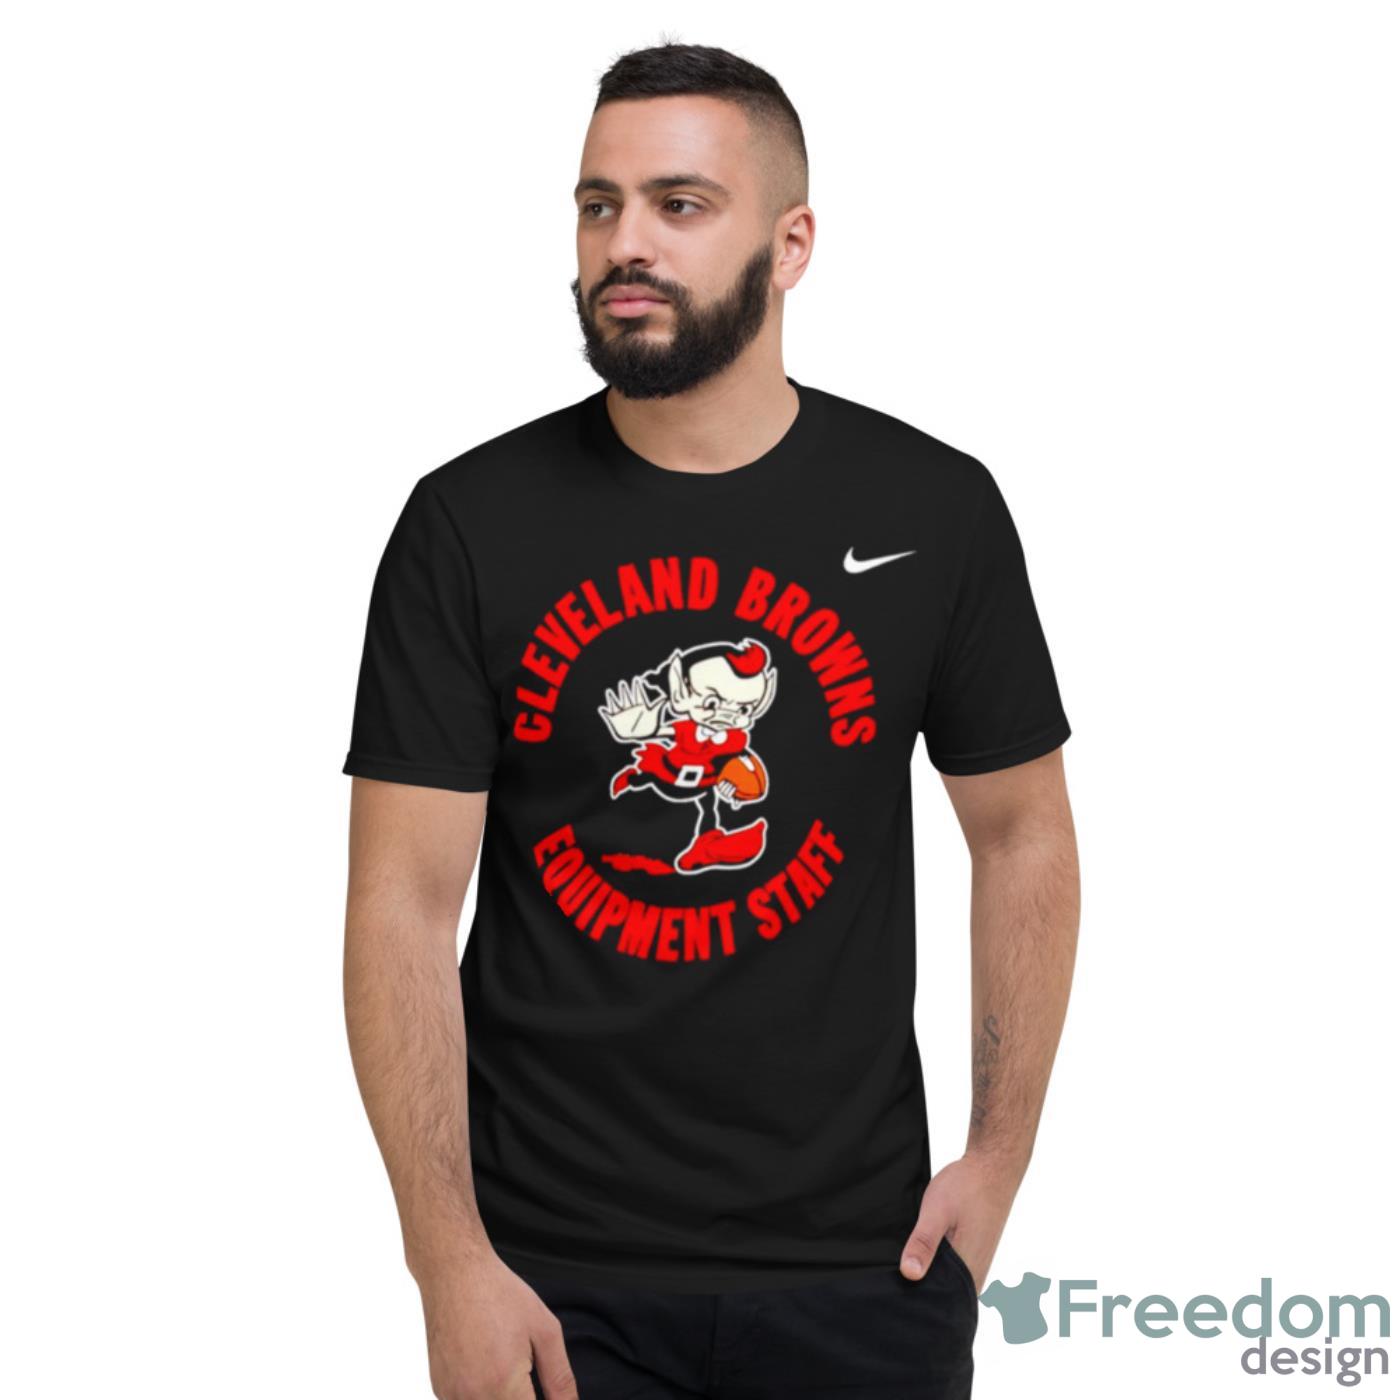 Cleveland Browns Equipment Staff Nike Shirt - Freedomdesign